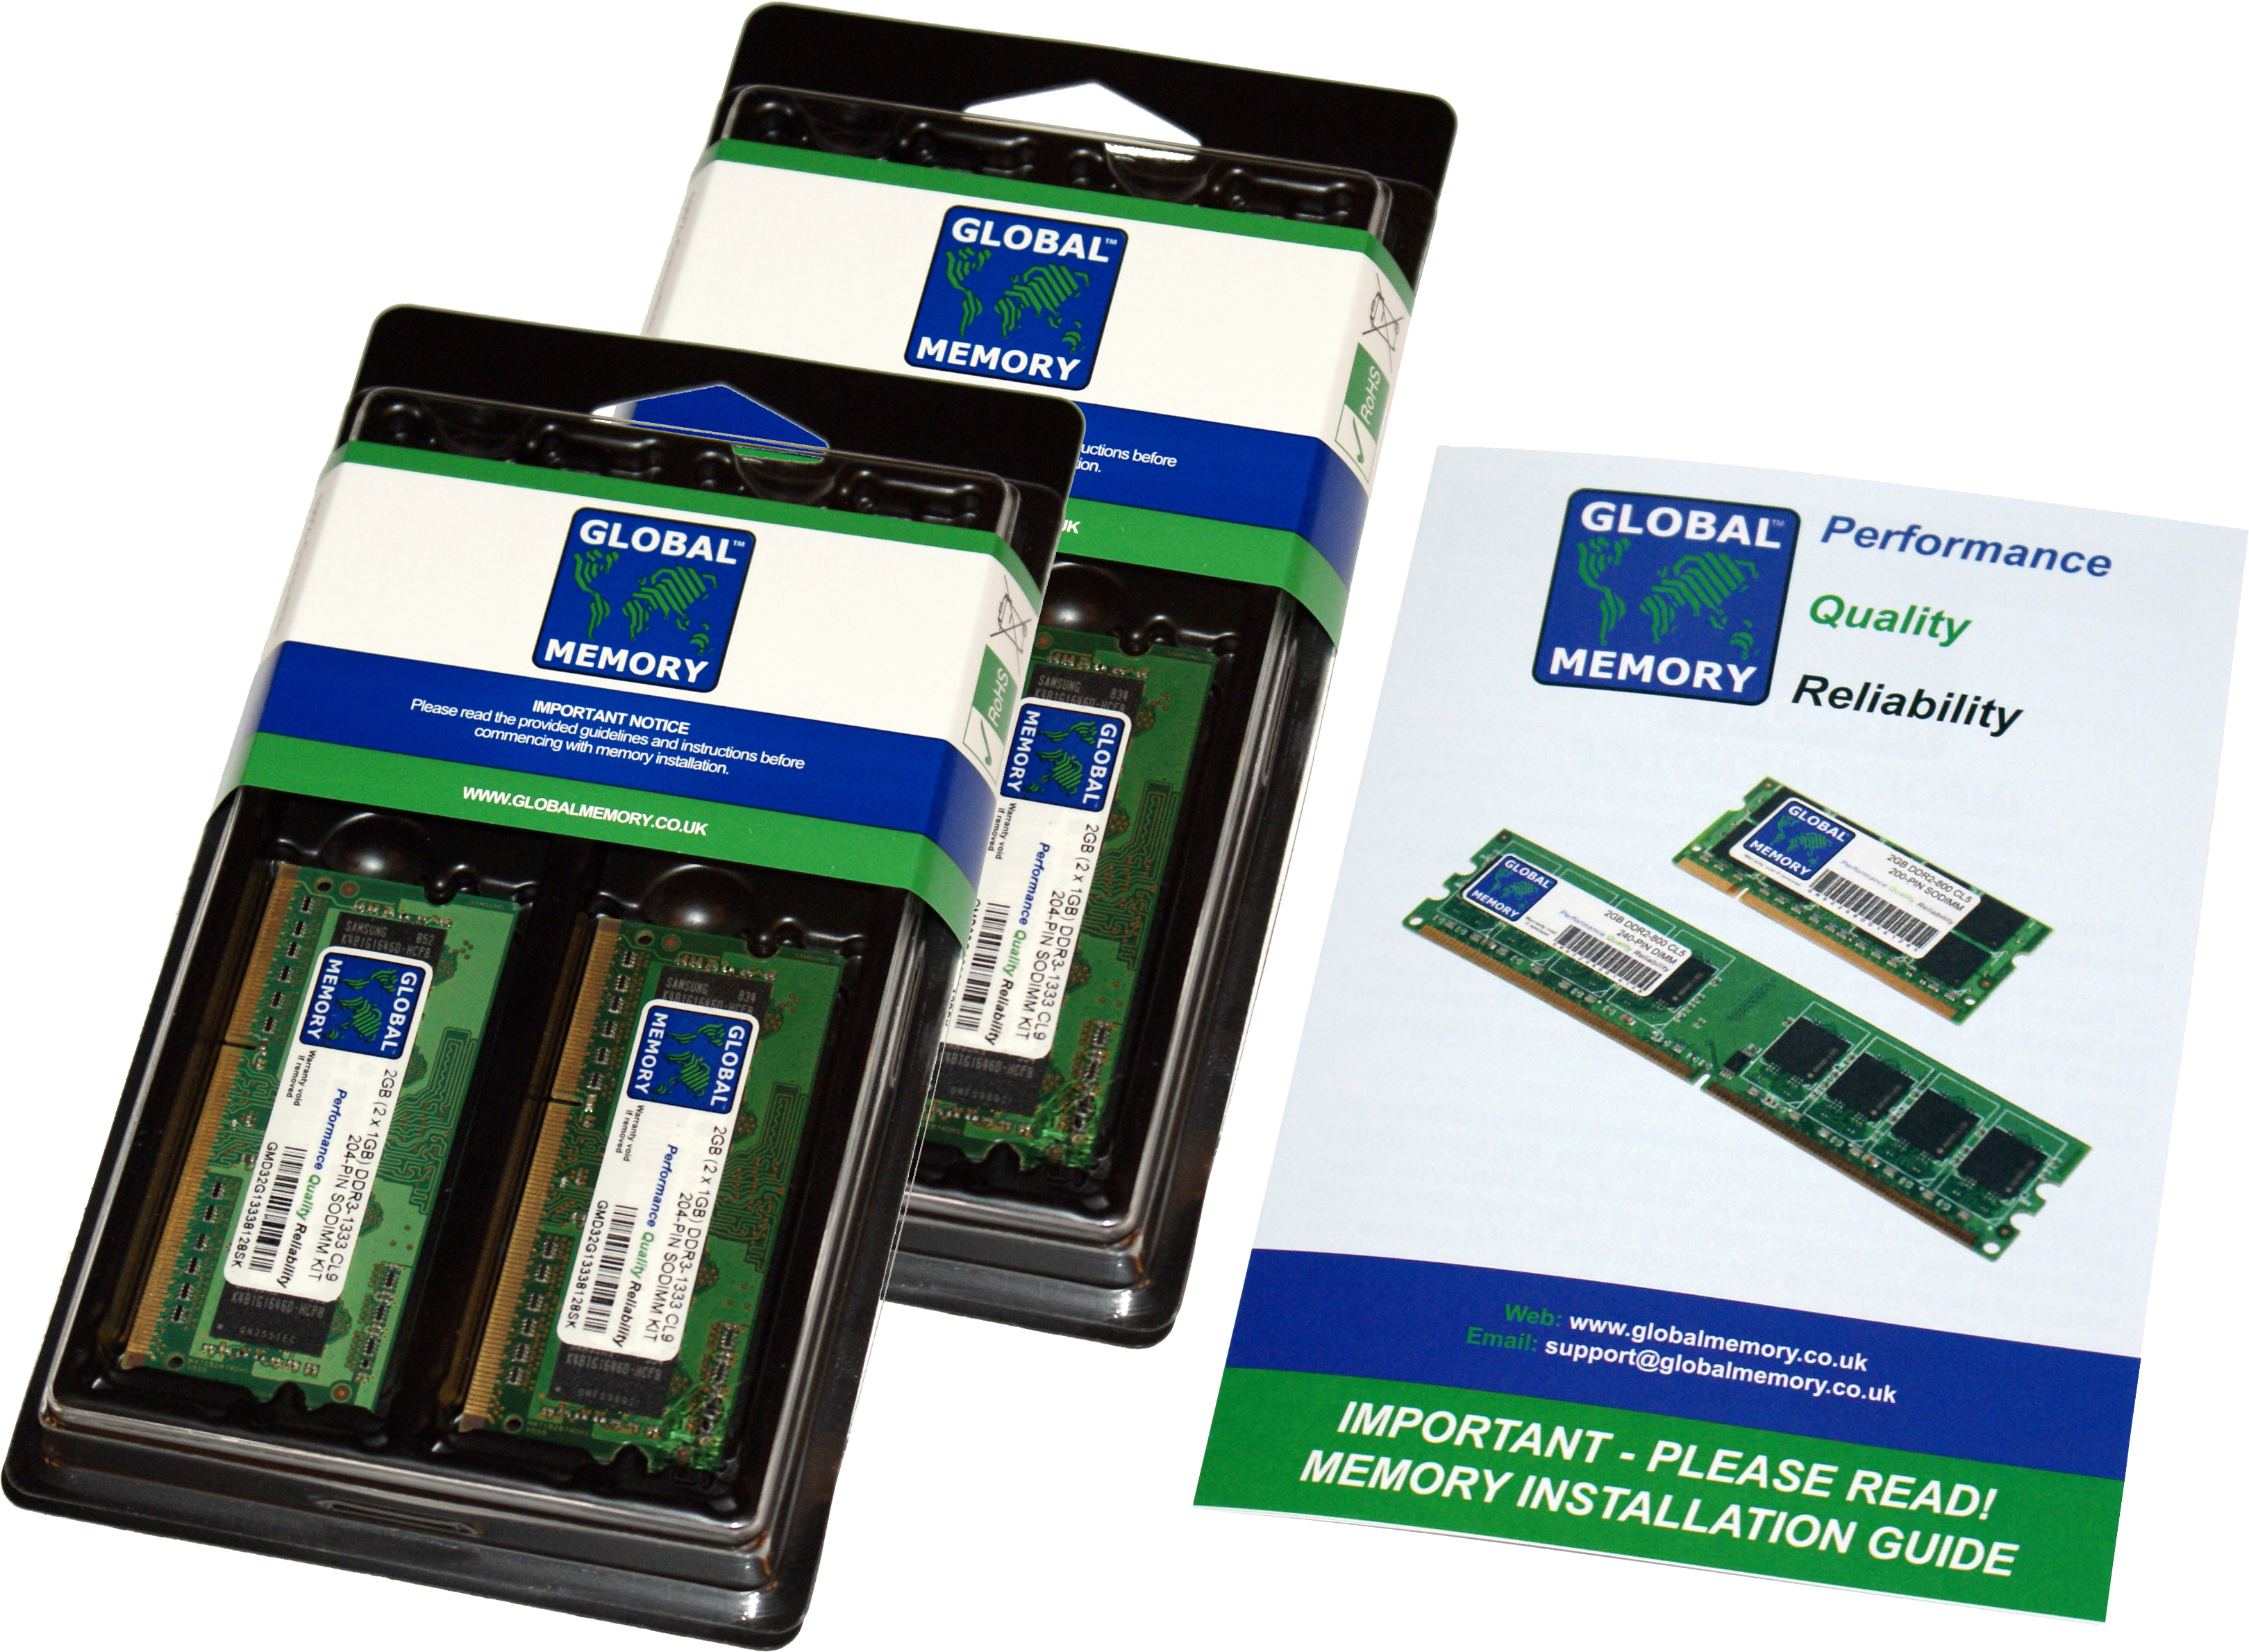 16GB (4 x 4GB) DDR4 2400MHz PC4-19200 260-PIN SODIMM MEMORY RAM KIT FOR LAPTOPS/NOTEBOOKS